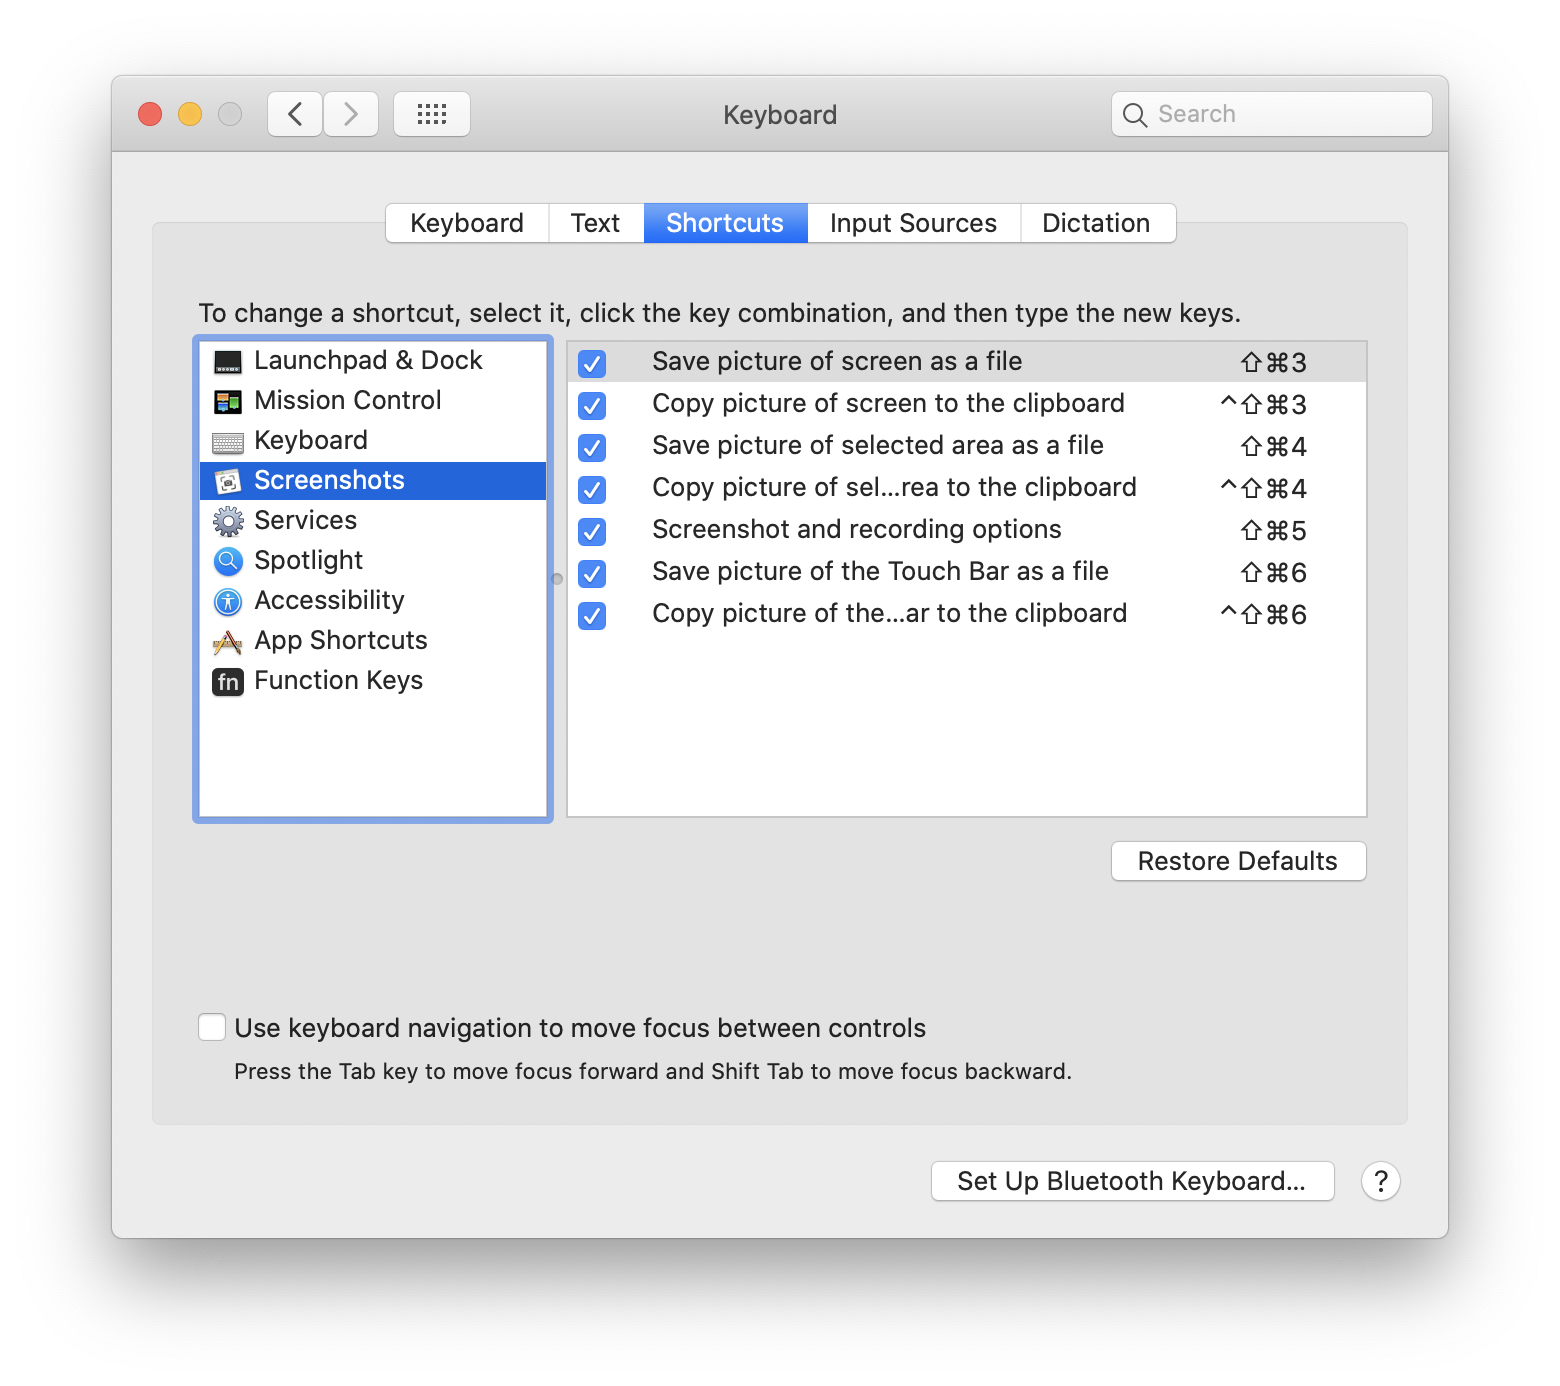 mac print screen shortcut